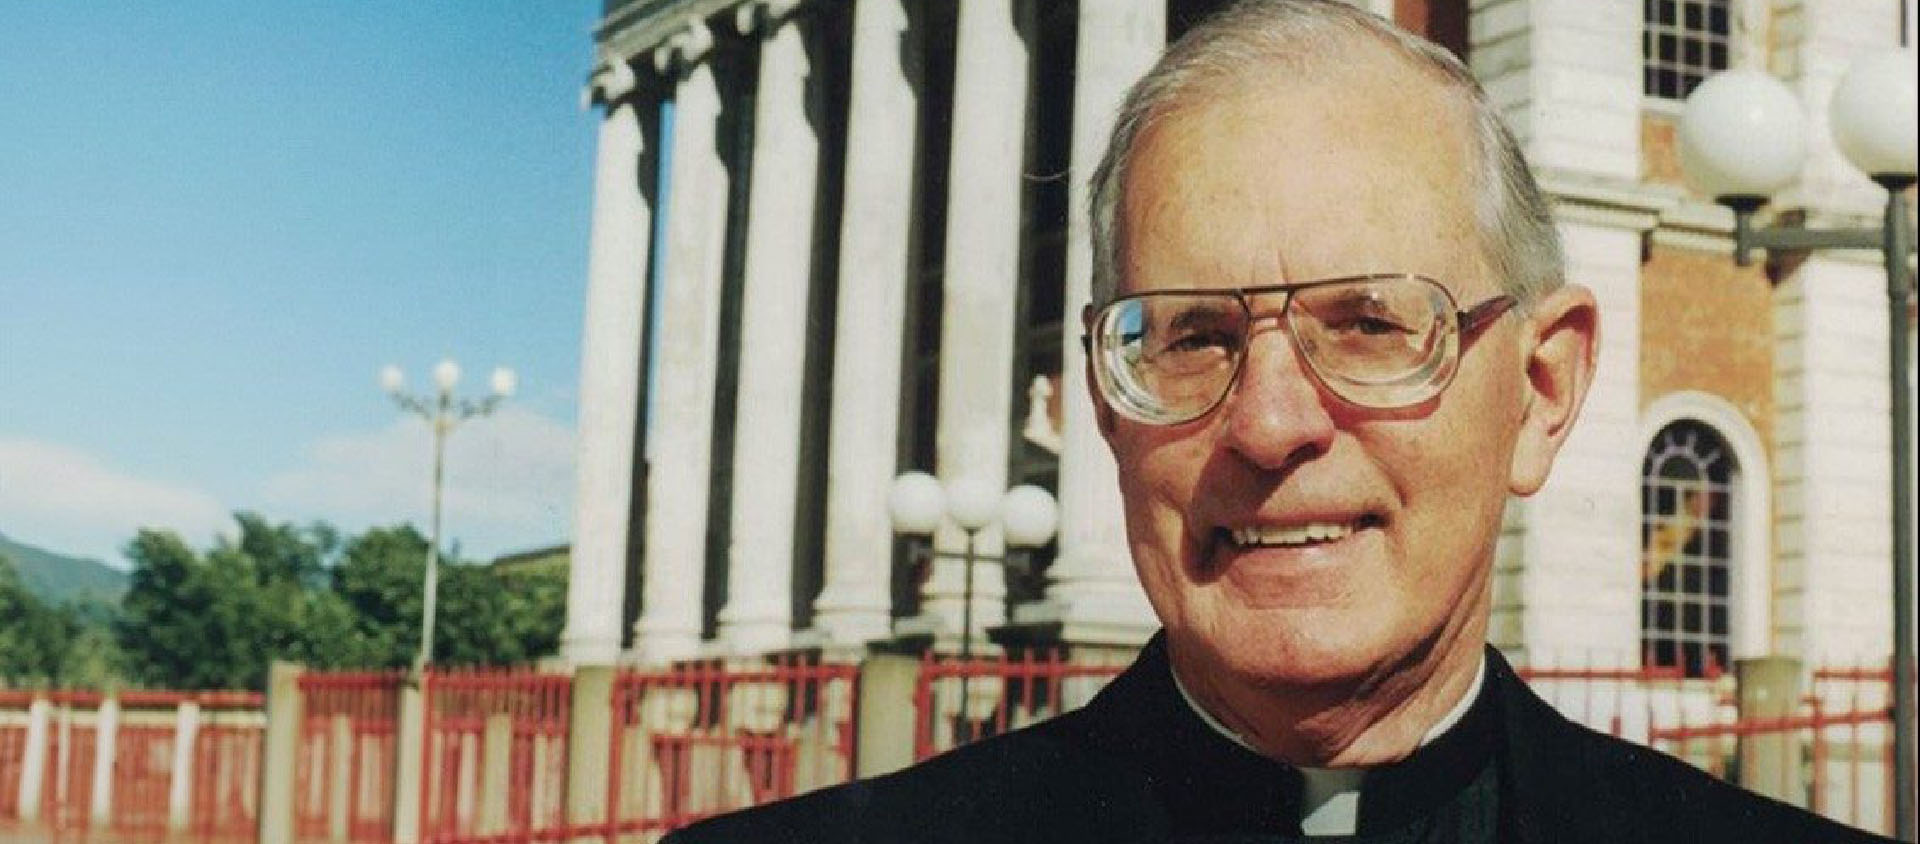 Thomas Stafford Williams a été créé cardinal par Jean Paul II en février 1983 | © Vatican media